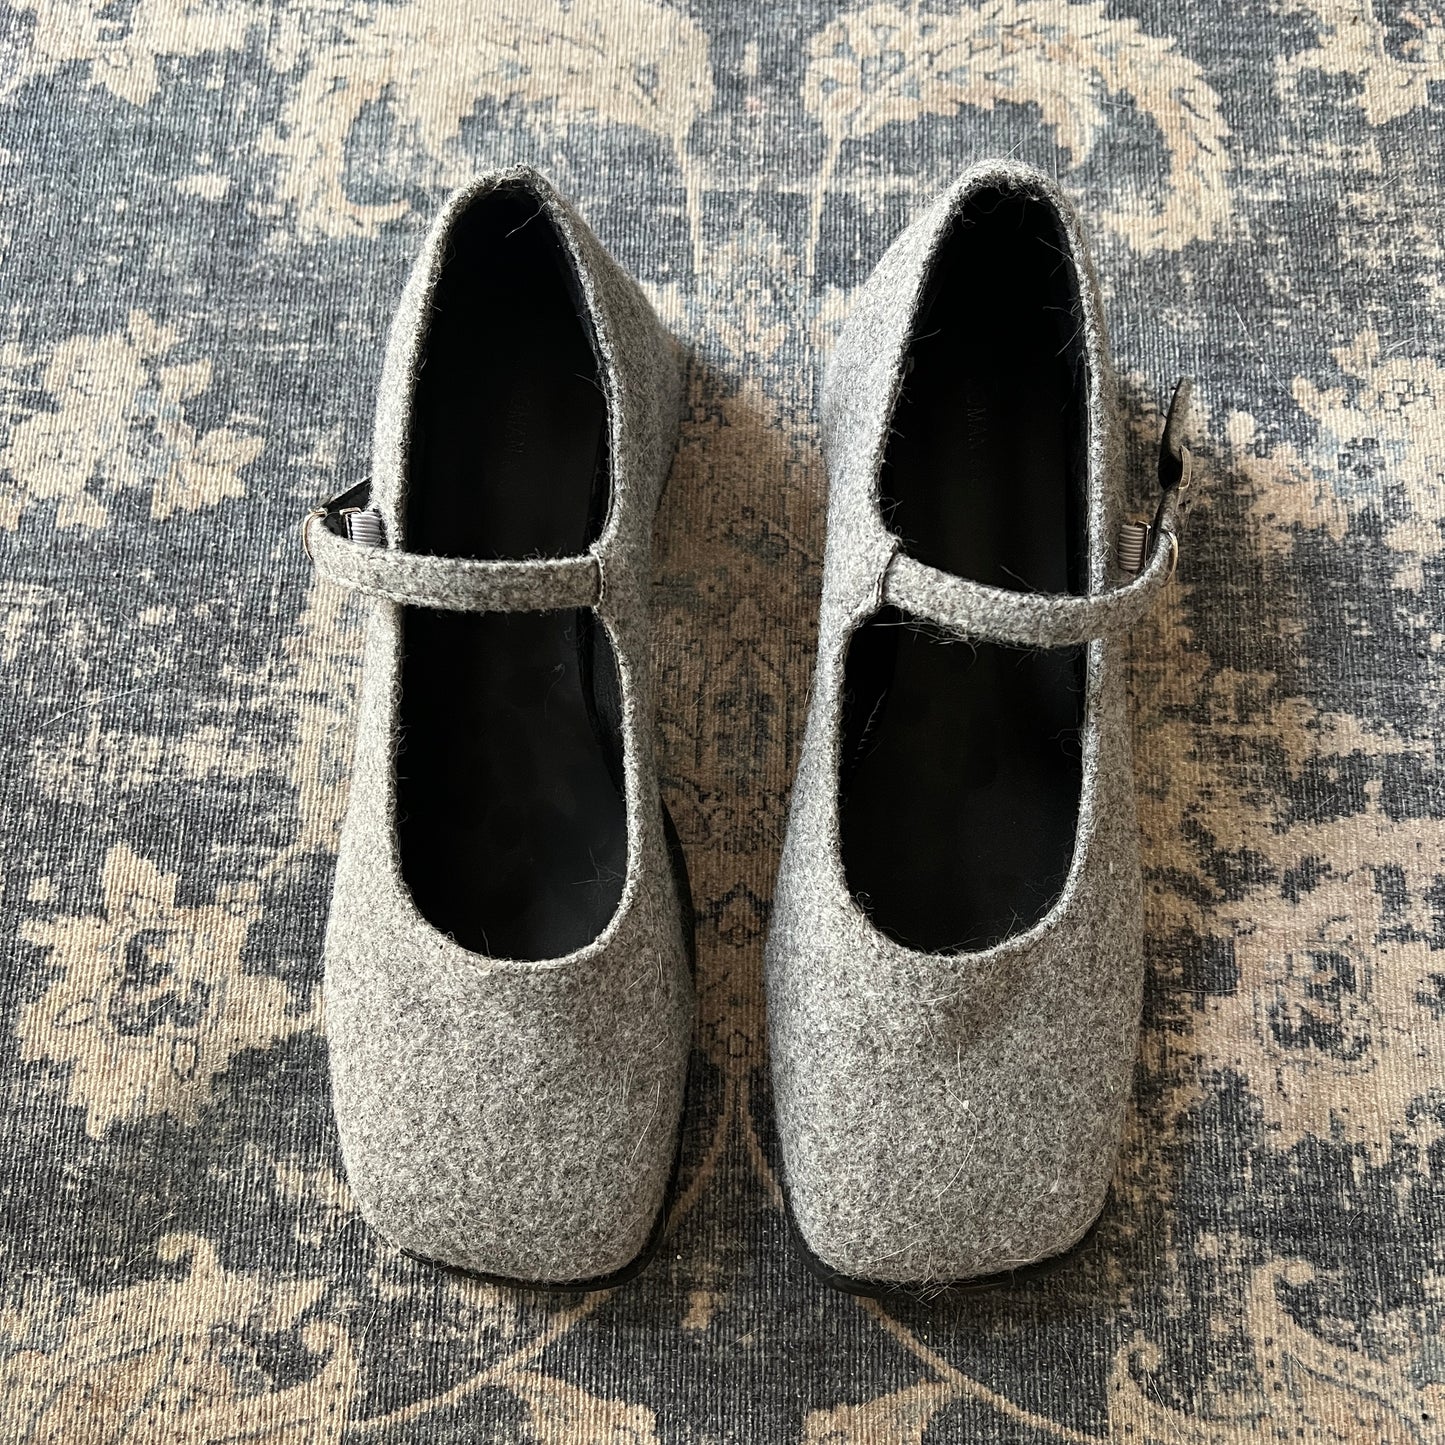 grey wool mary janes 𝜗𝜚 24.5mxn